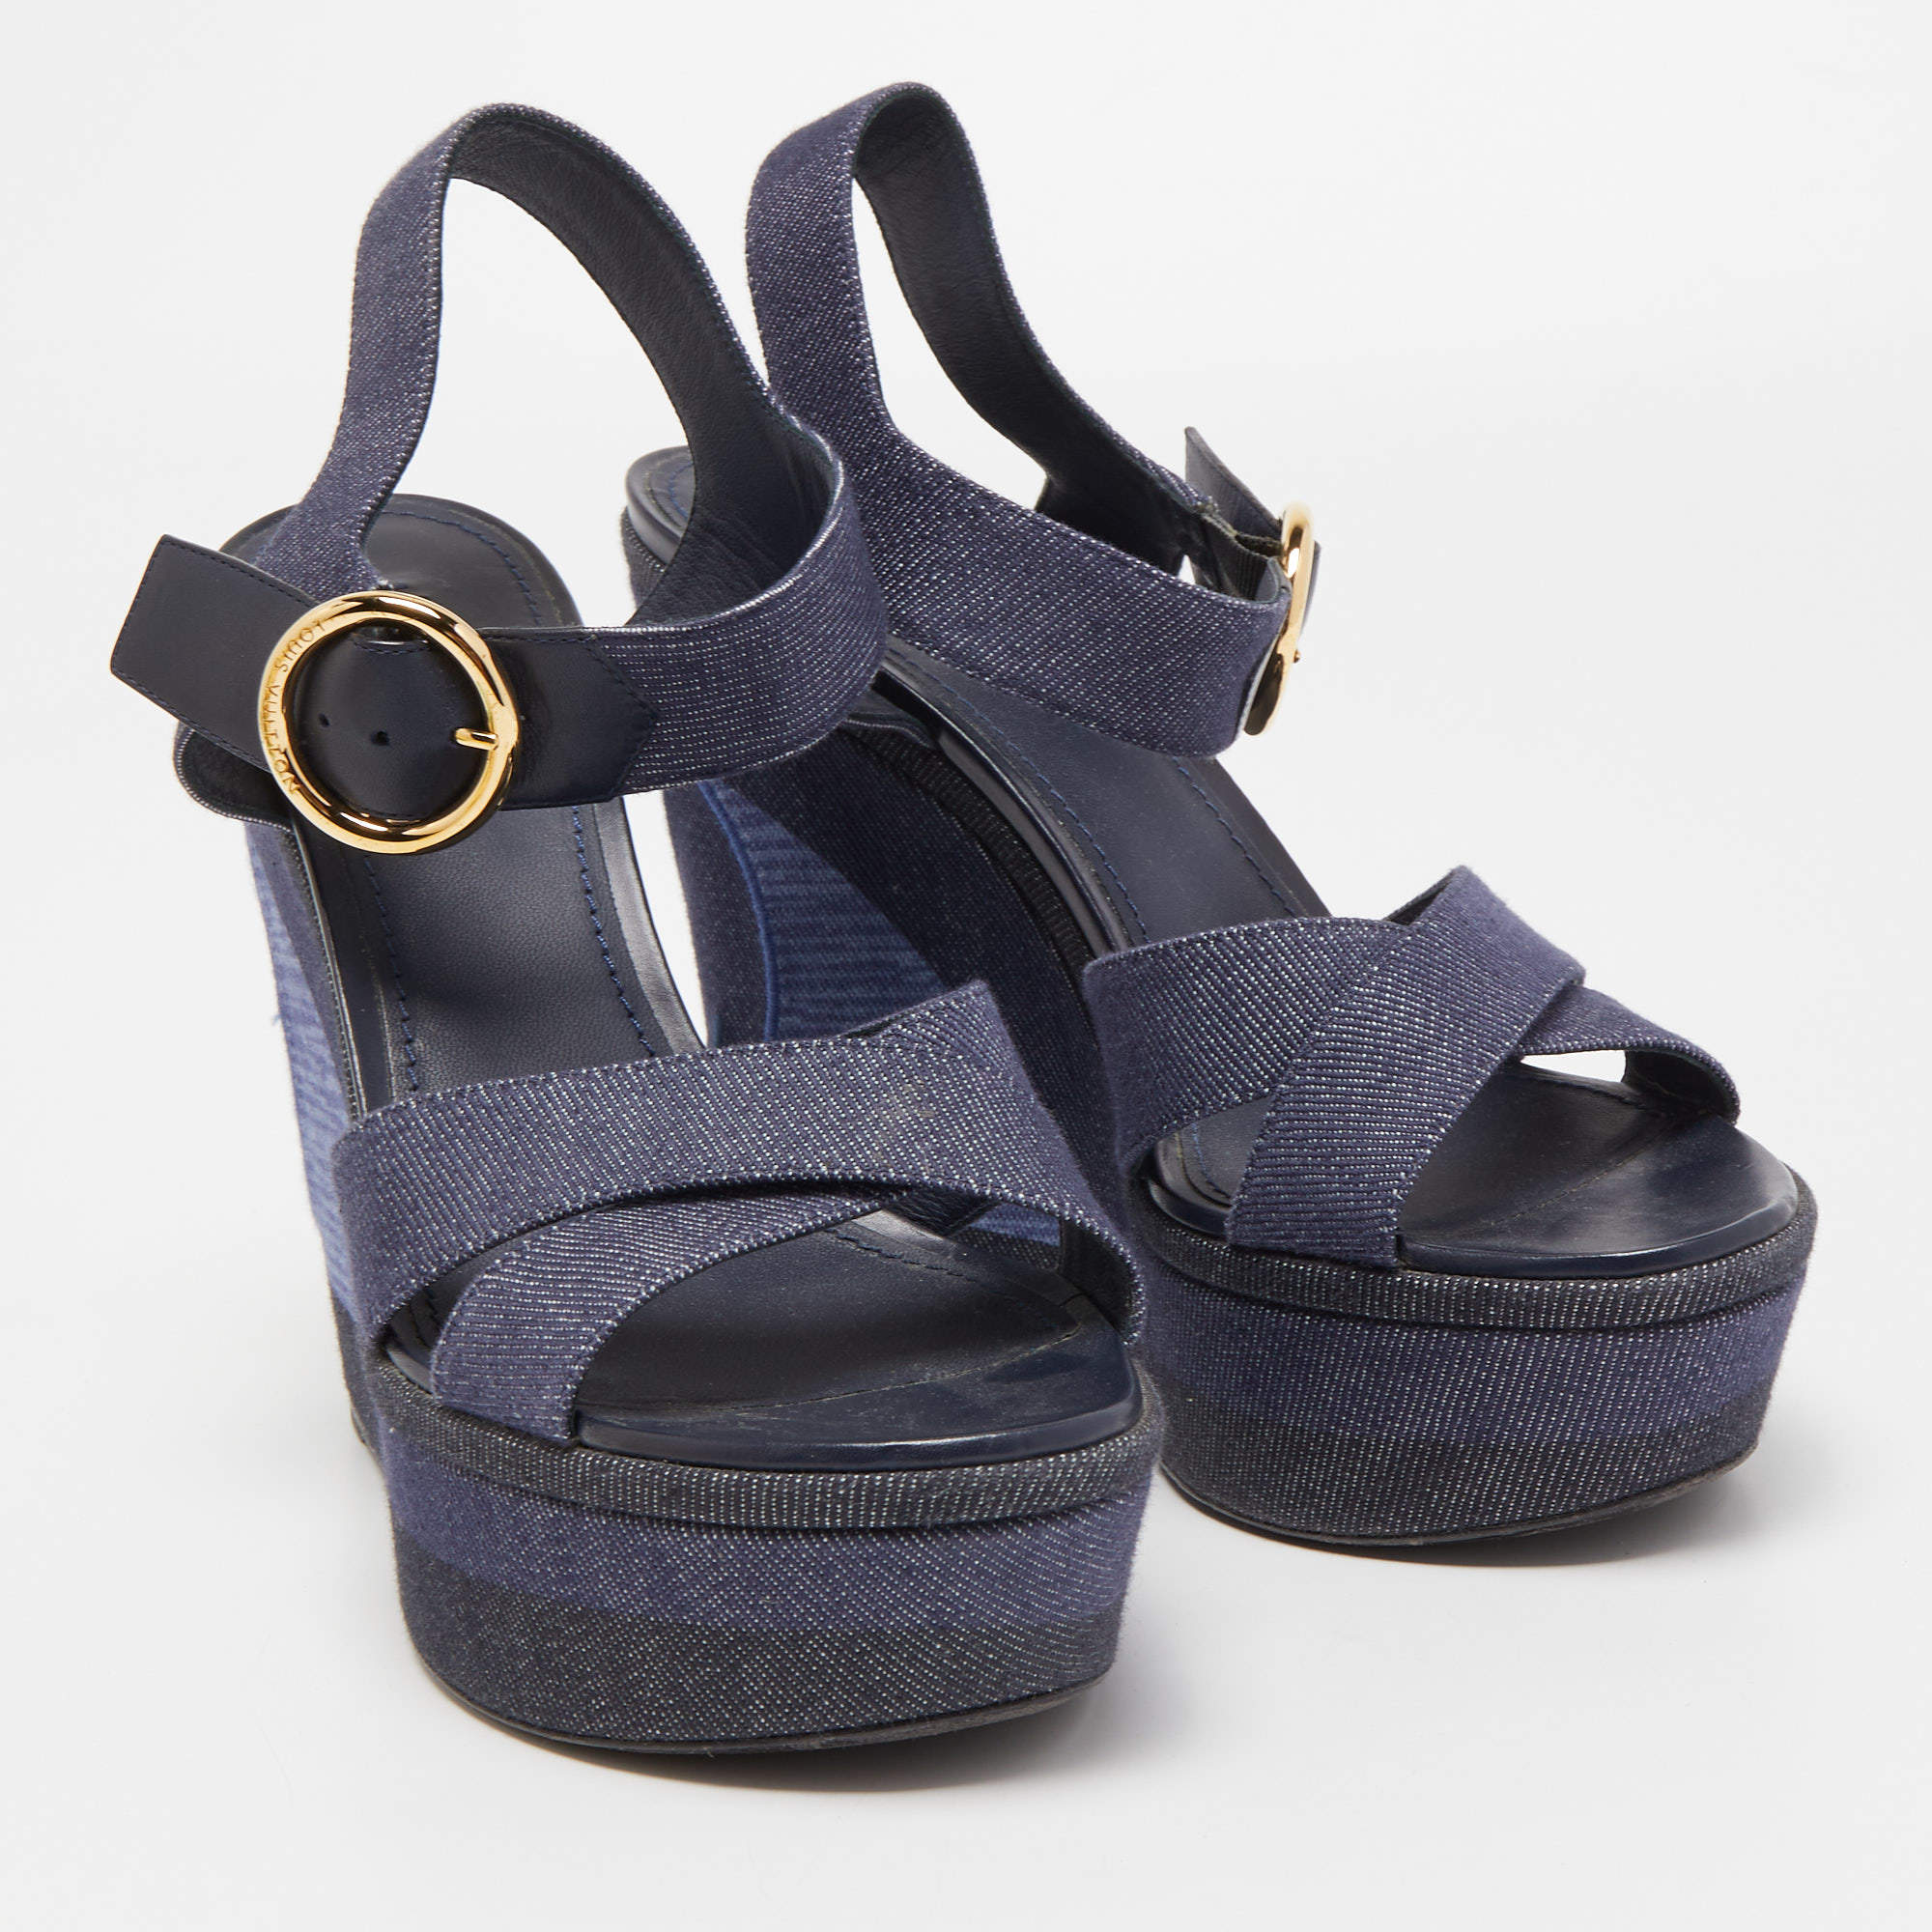 Louis Vuitton Blue Leather/Denim Wedge Sandals Size 5.5/36 - Yoogi's Closet